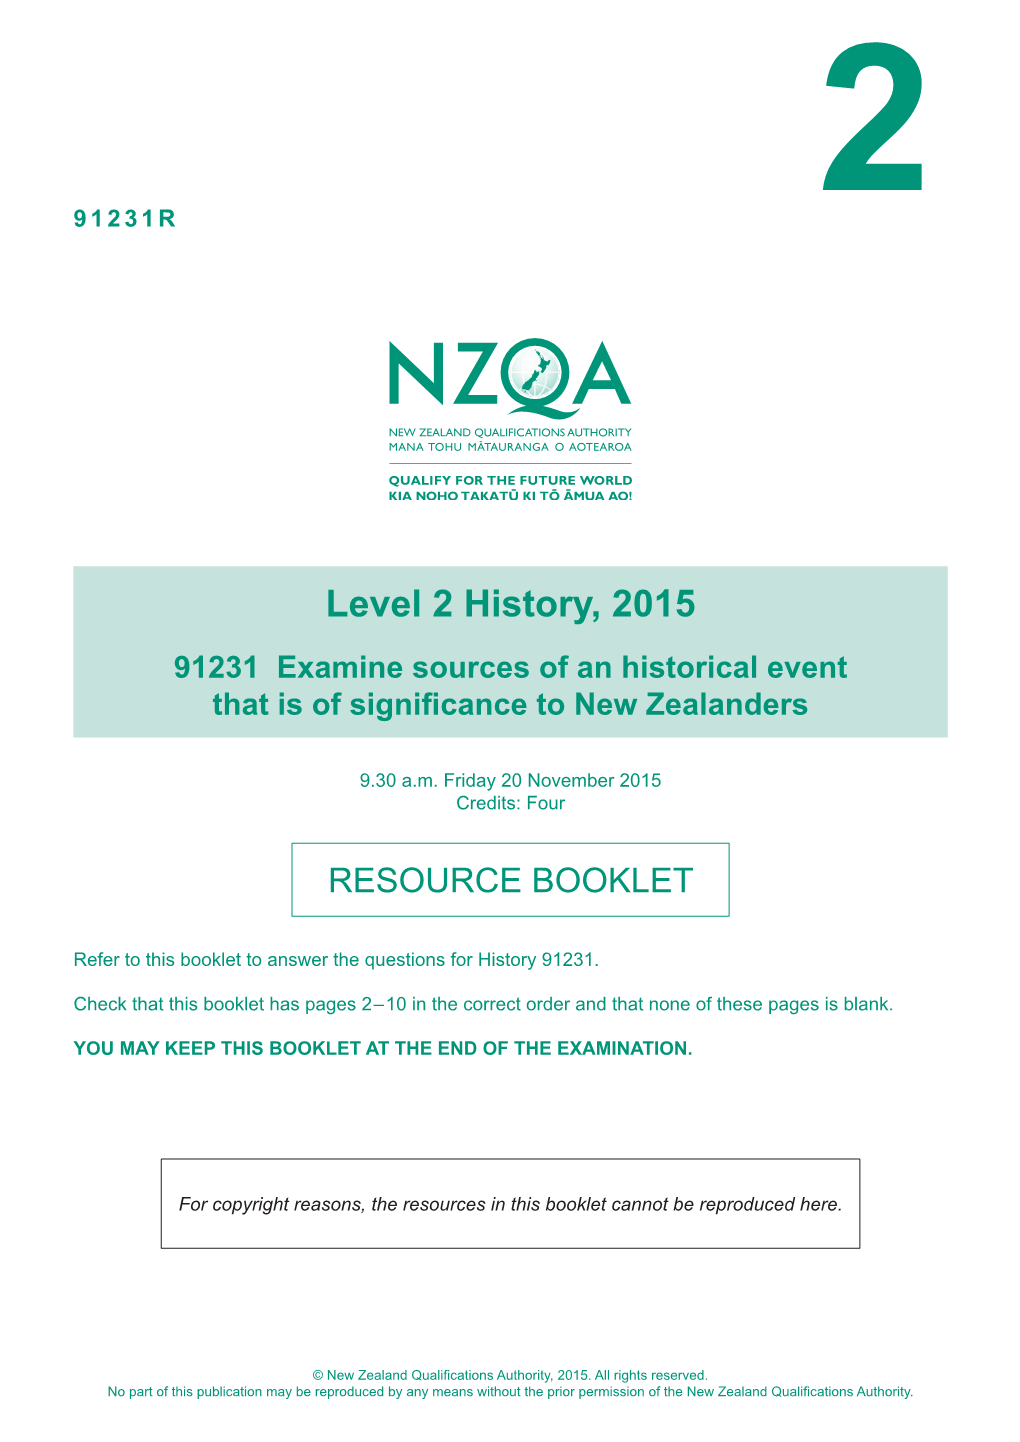 Level 2 History (91231) 2015